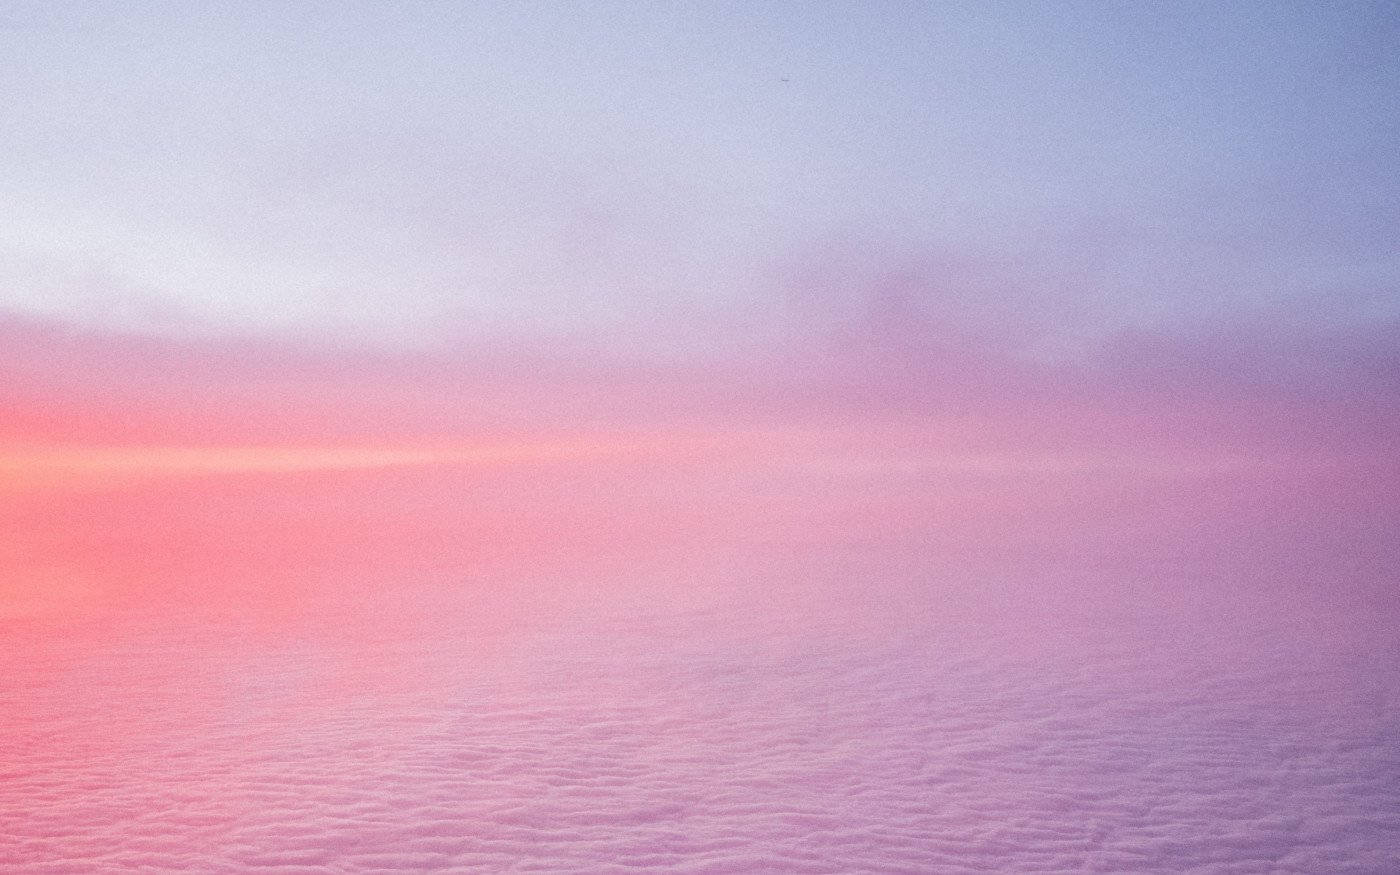 Pink Cloud Over Sea Wallpaper